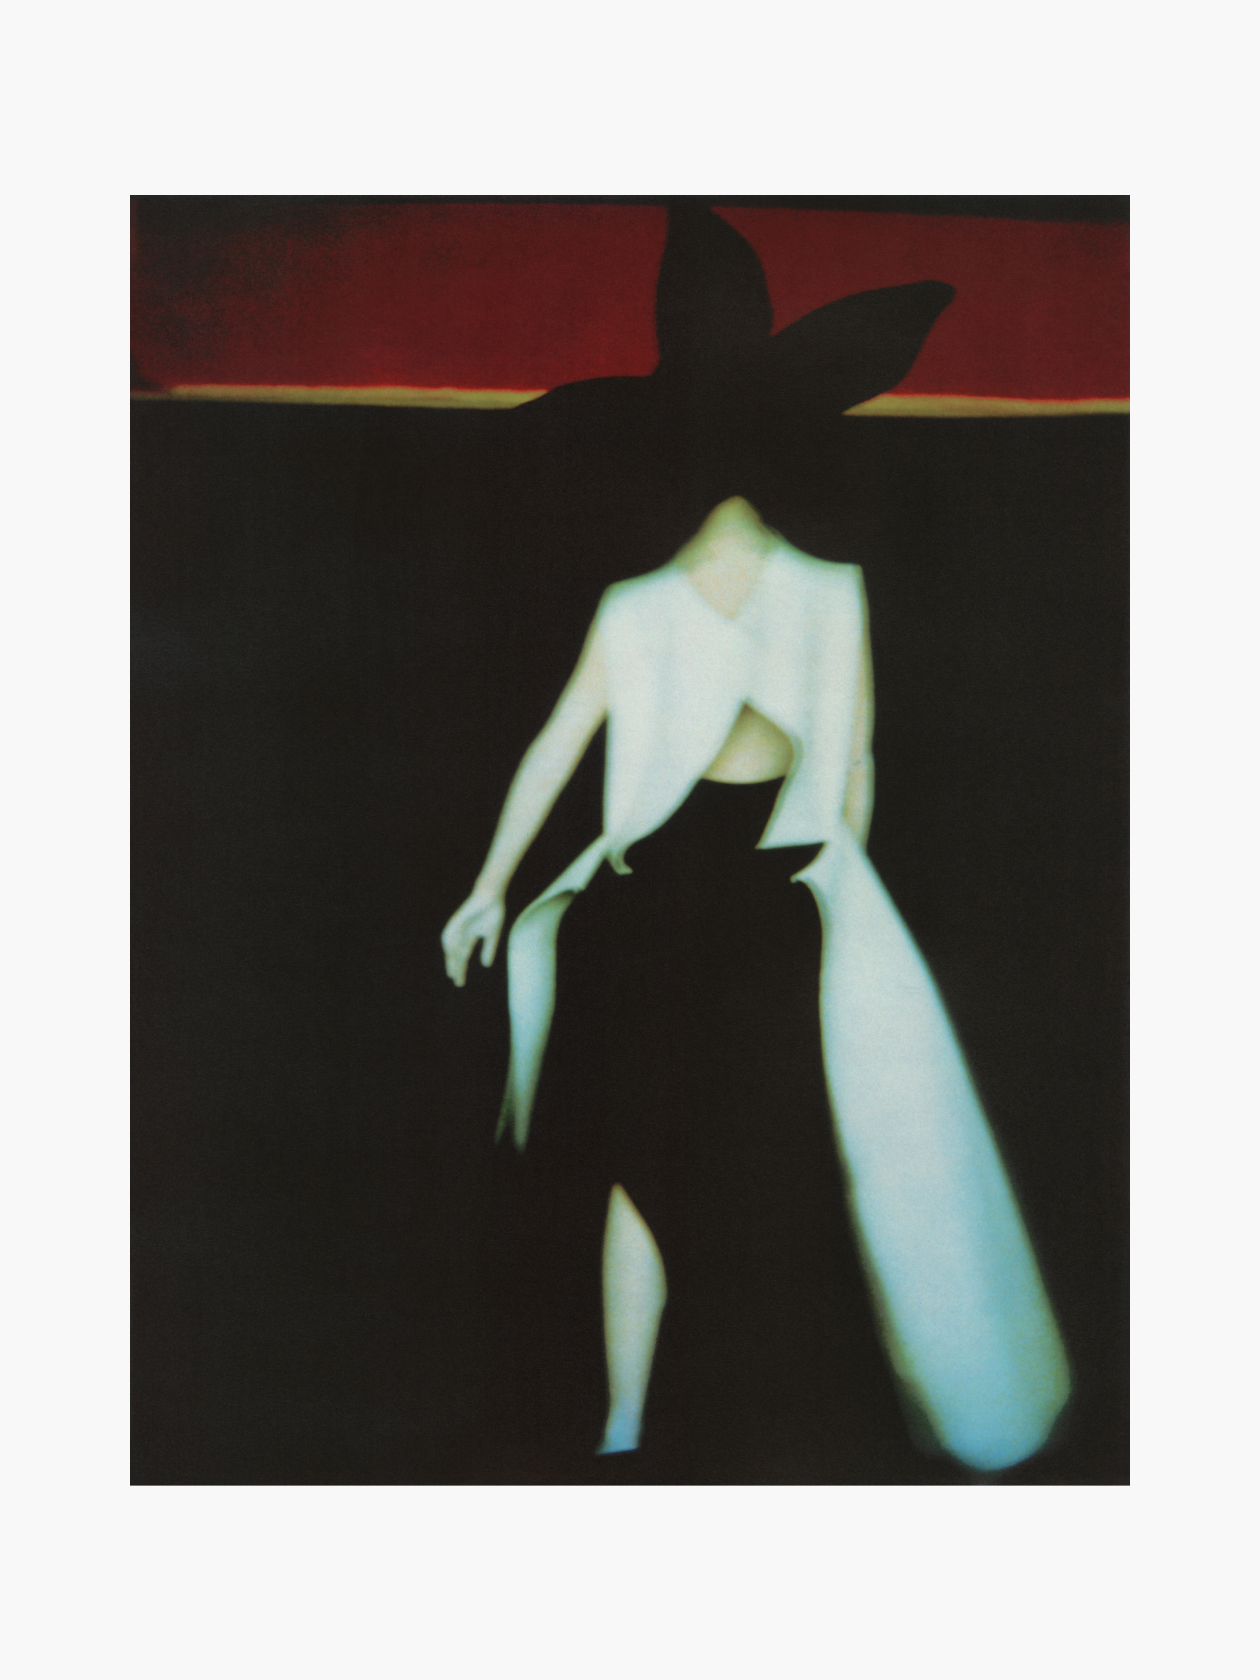 Картина — Сара Мун, «Мода 4 Yohji Yamamoto», 1999. Собрание фонда Still Art. Изображение предоставлено пресс-службой МАММ